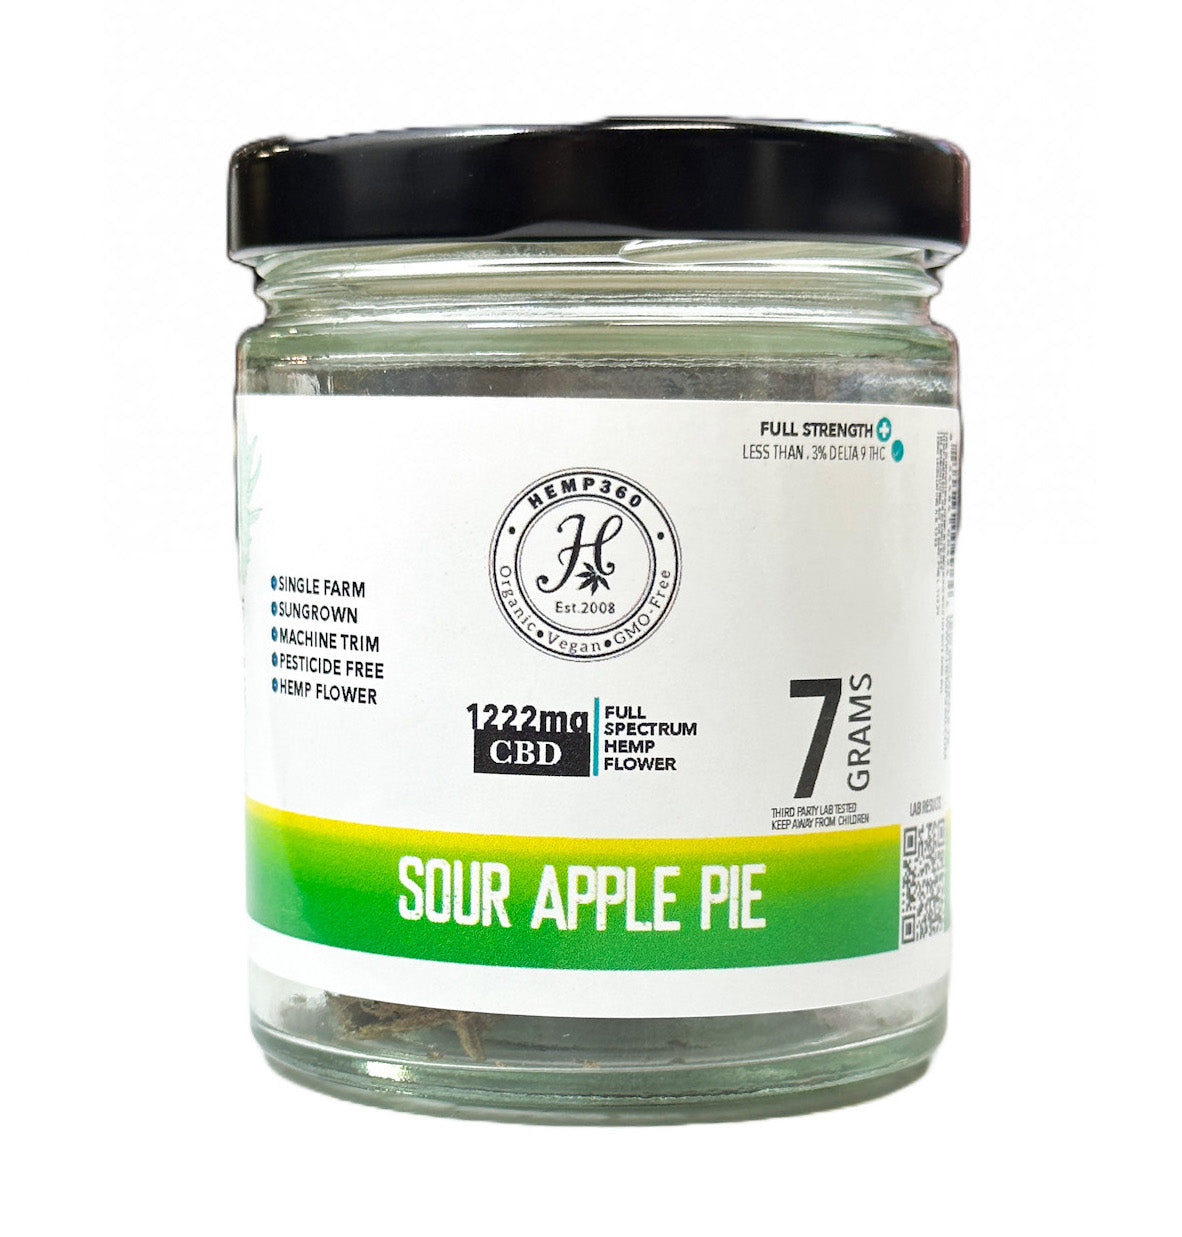 *New* Sour Apple Pie CBD Flower